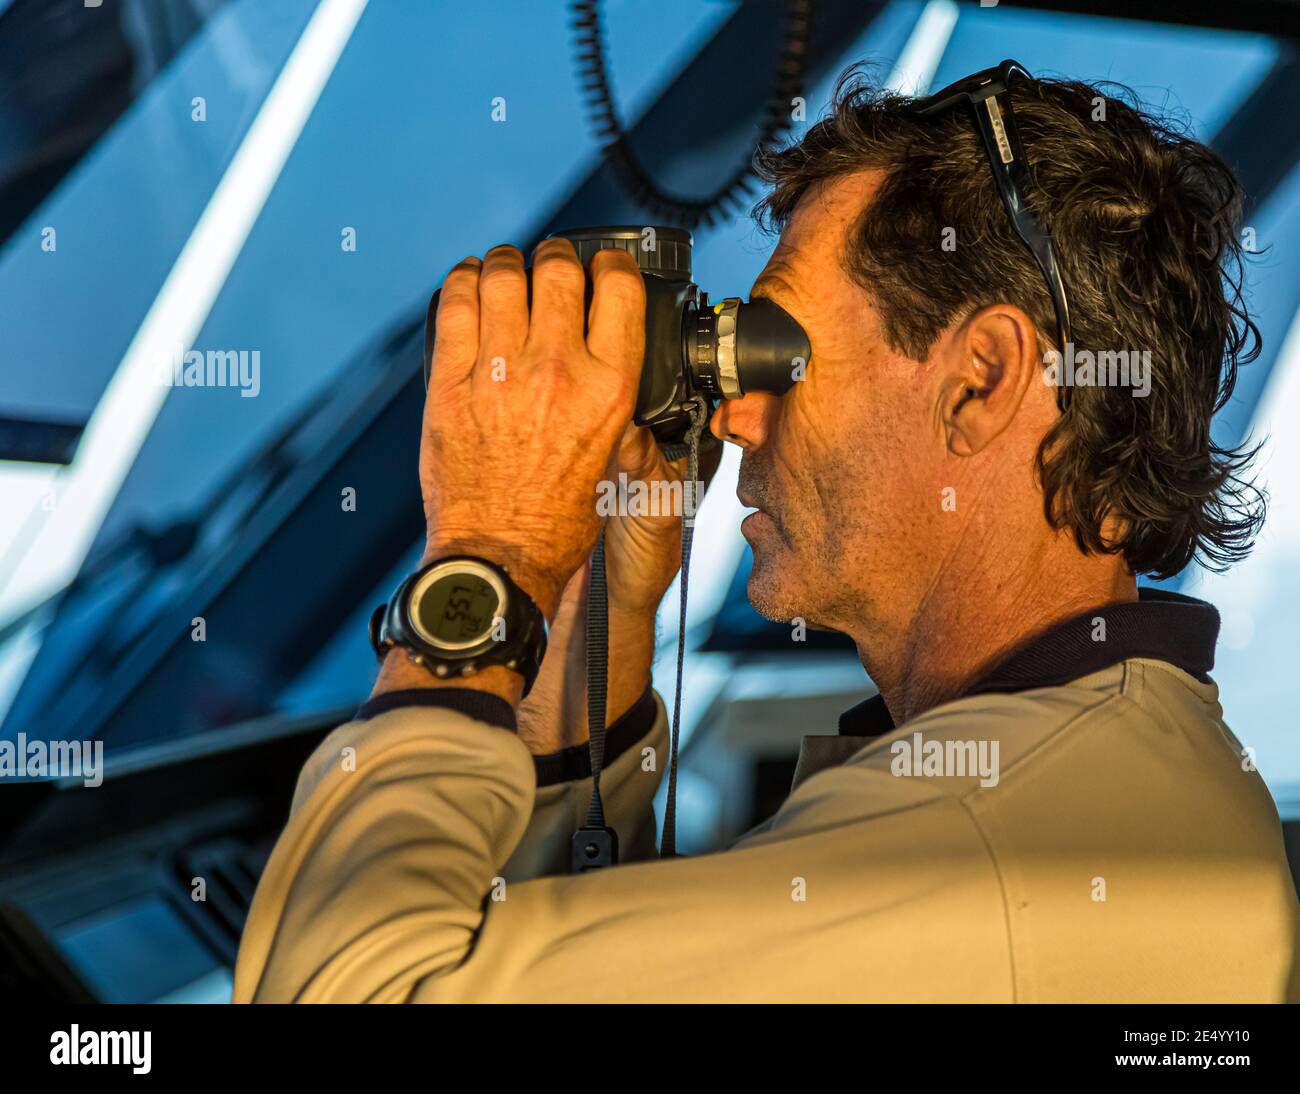 Captain using stabilized binoculars Stock Photo